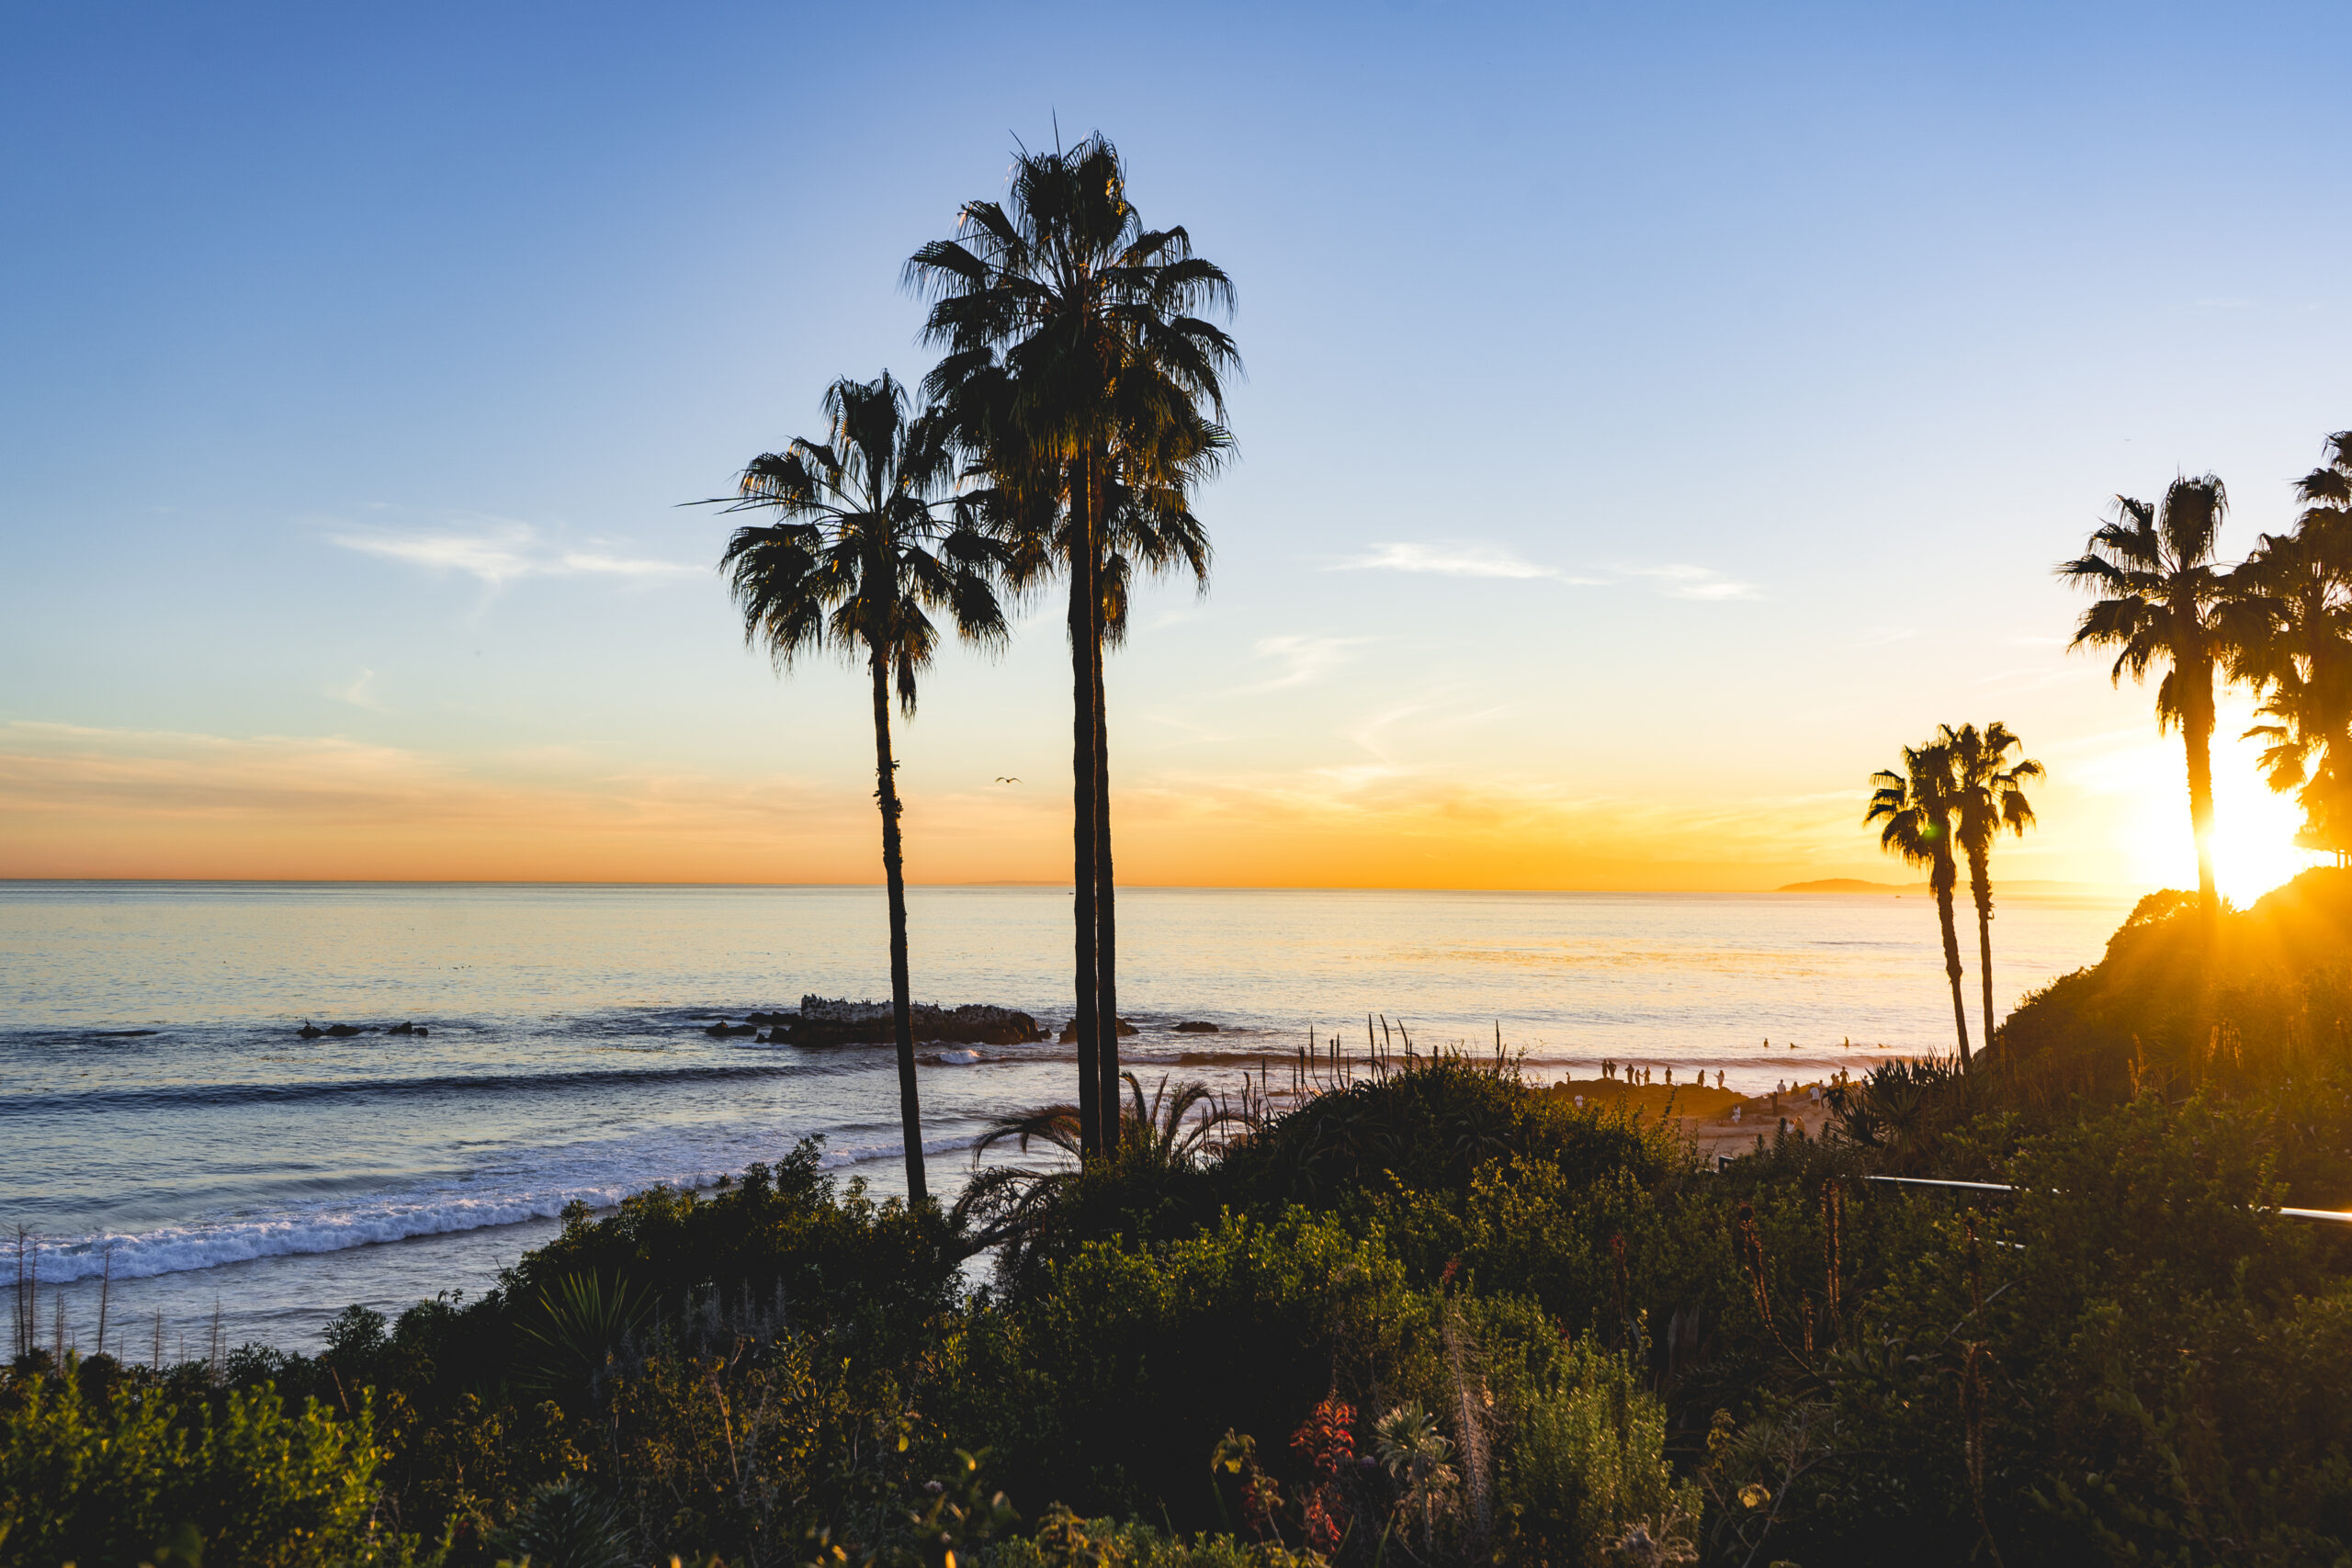 A view of Laguna Beach sunset at the beach. Laguna Beach is located in southern California.